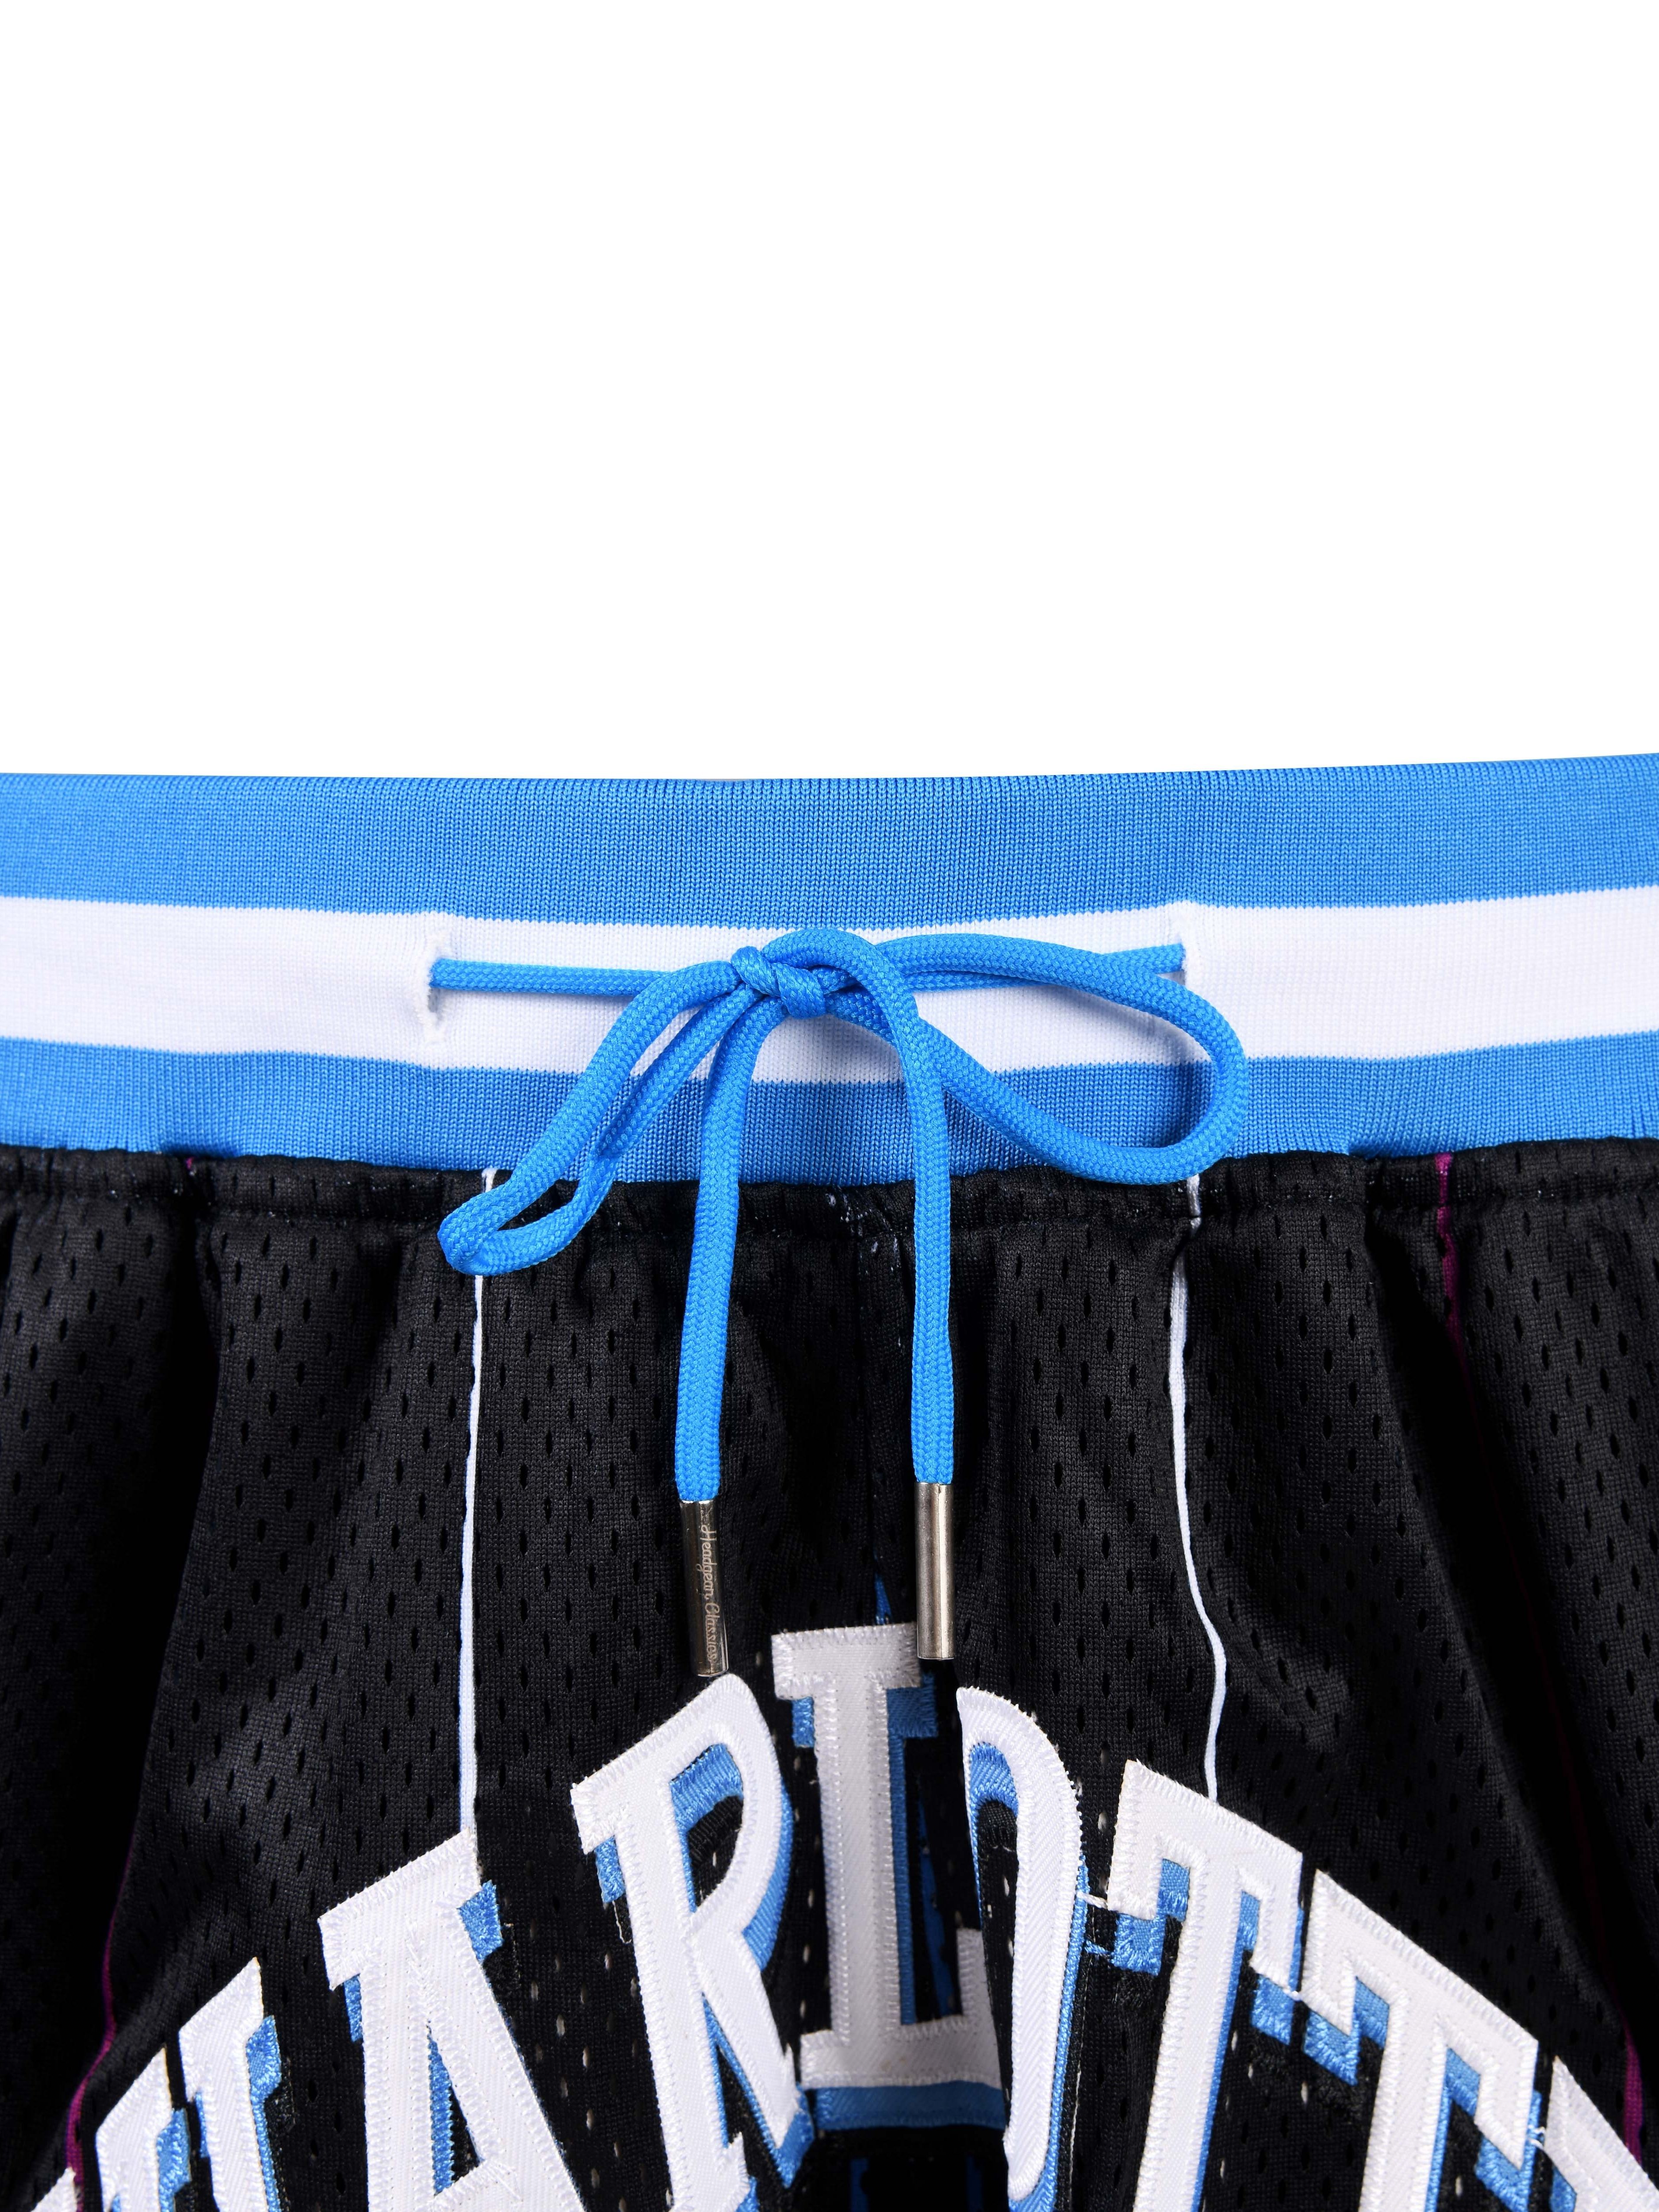 New Orlando Magic Blue Retro Men Basketball Shorts Size S-3XL